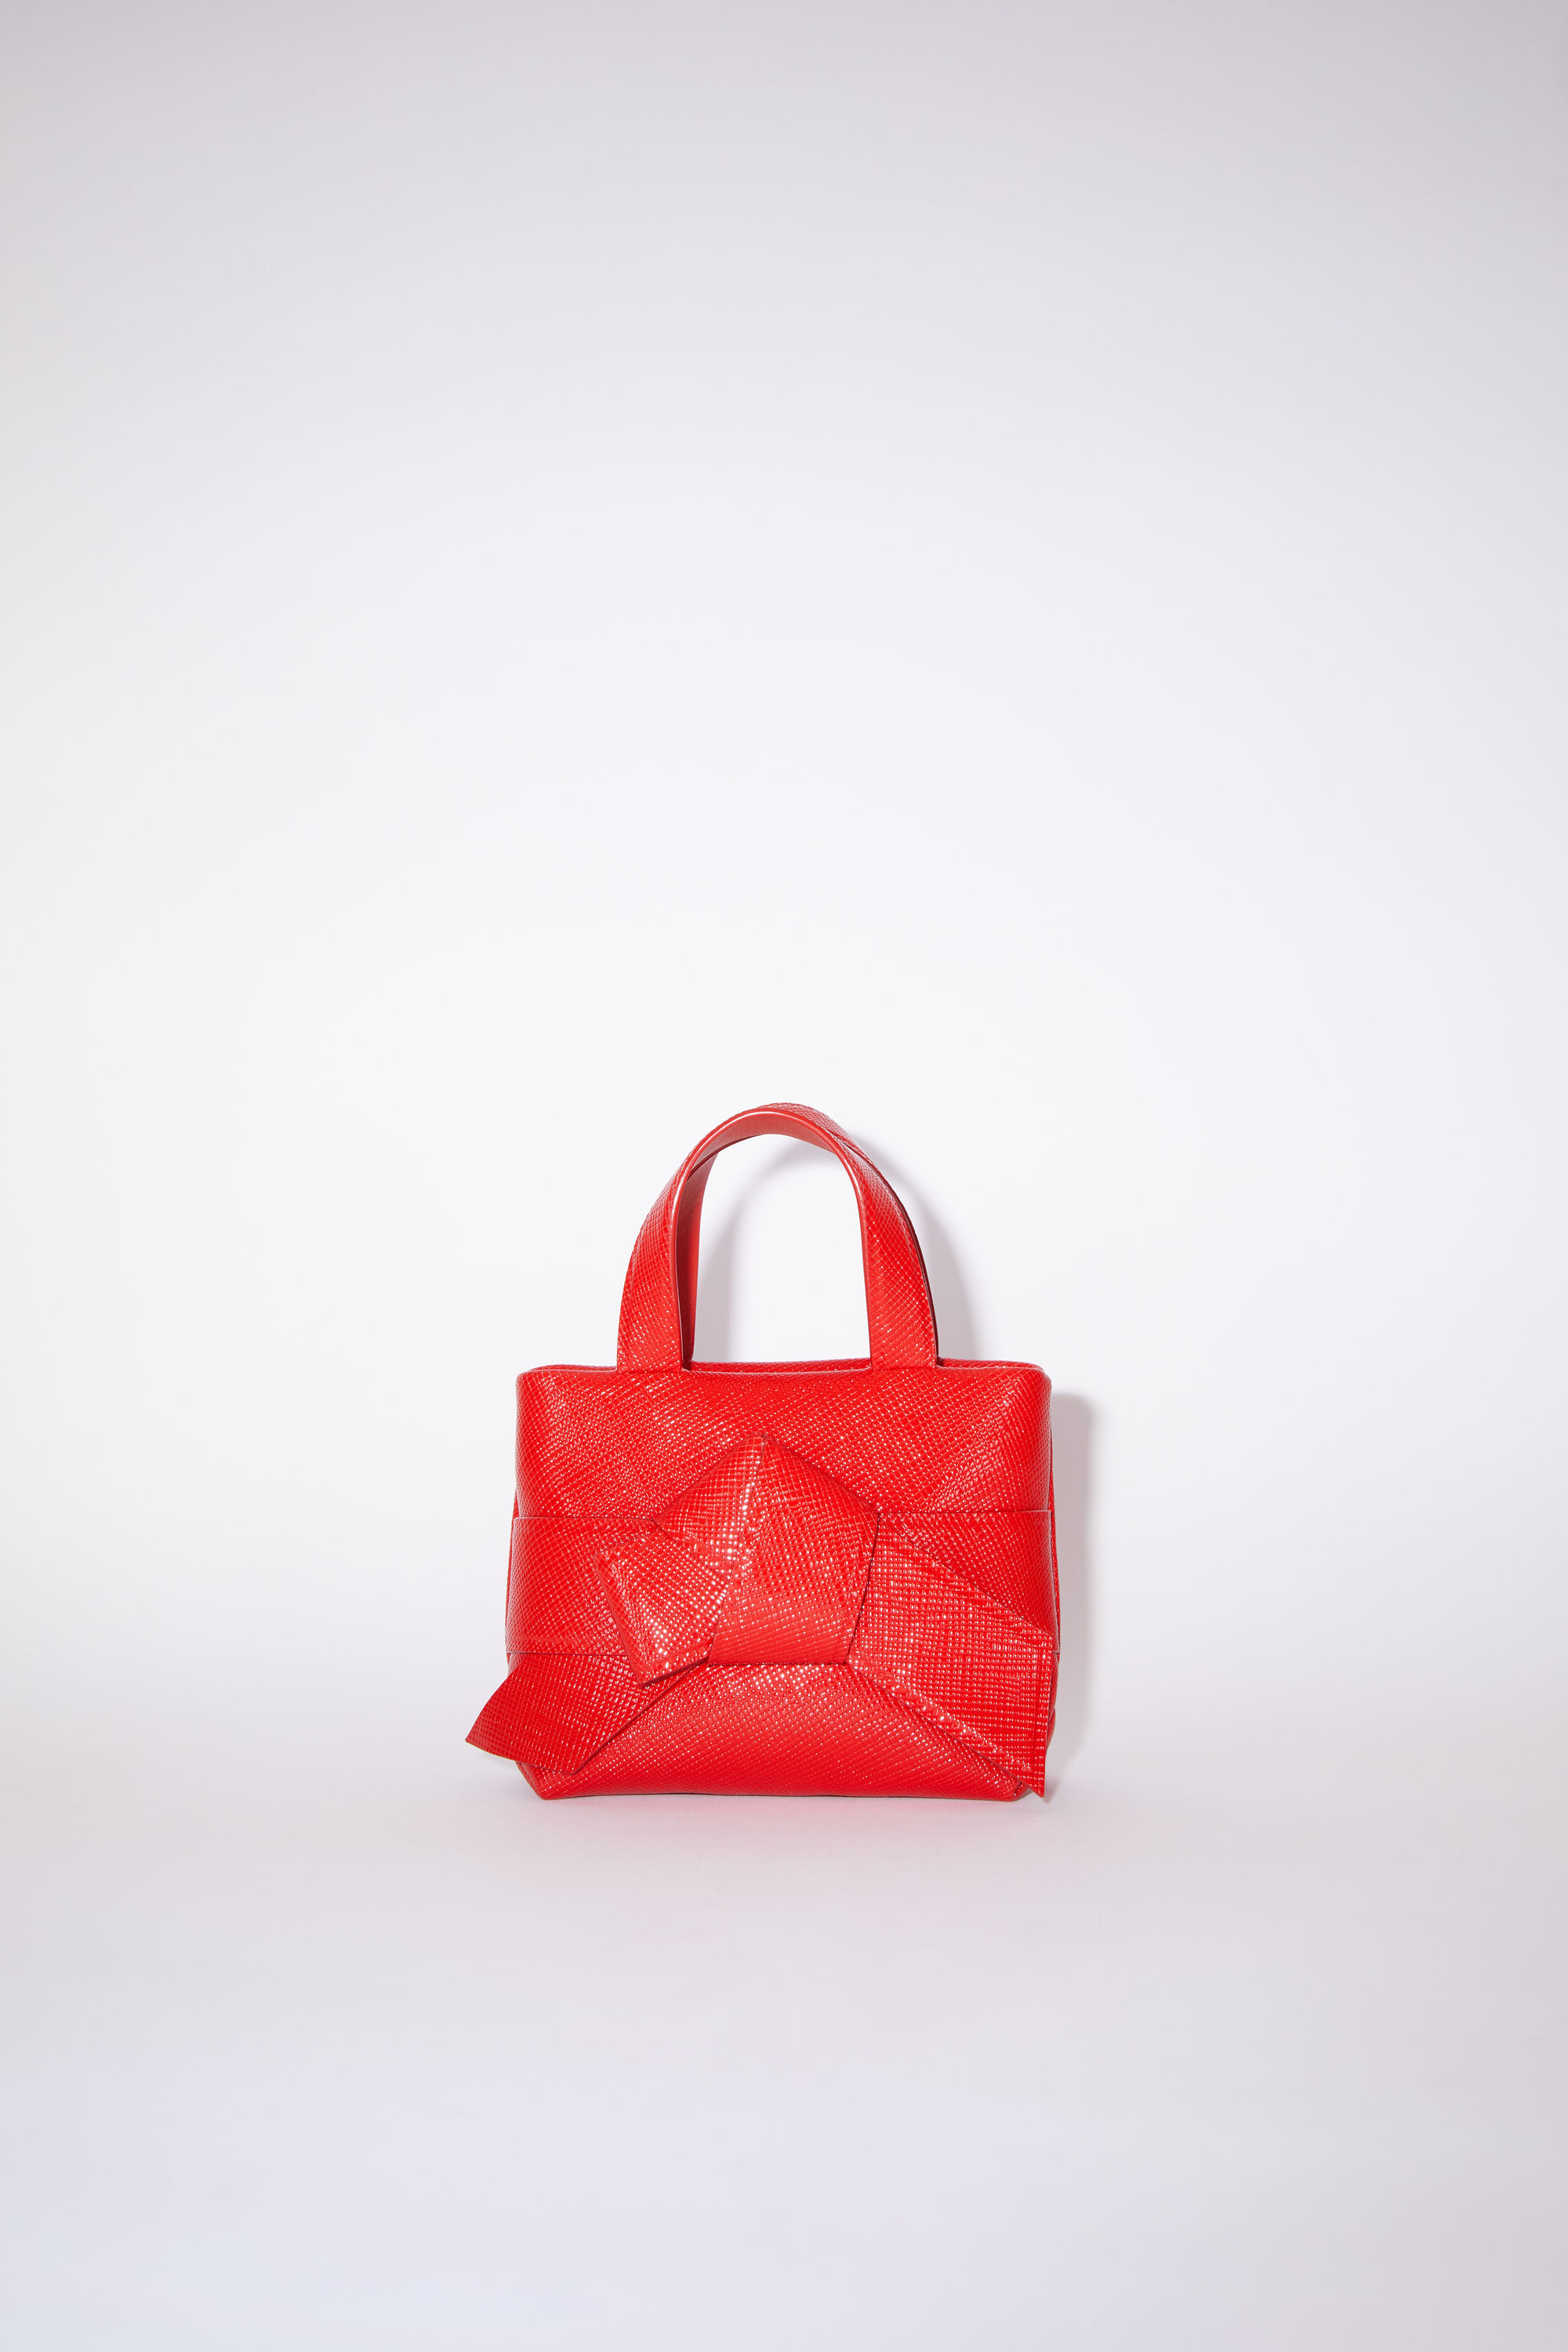 1980s Vintage Candy Red Aldo Leather and Suede Bag, Made in Canada, Red  Leather Bag, Vintage Red Leather Crossbody Bag, Vintage 80s Red Bag - Etsy